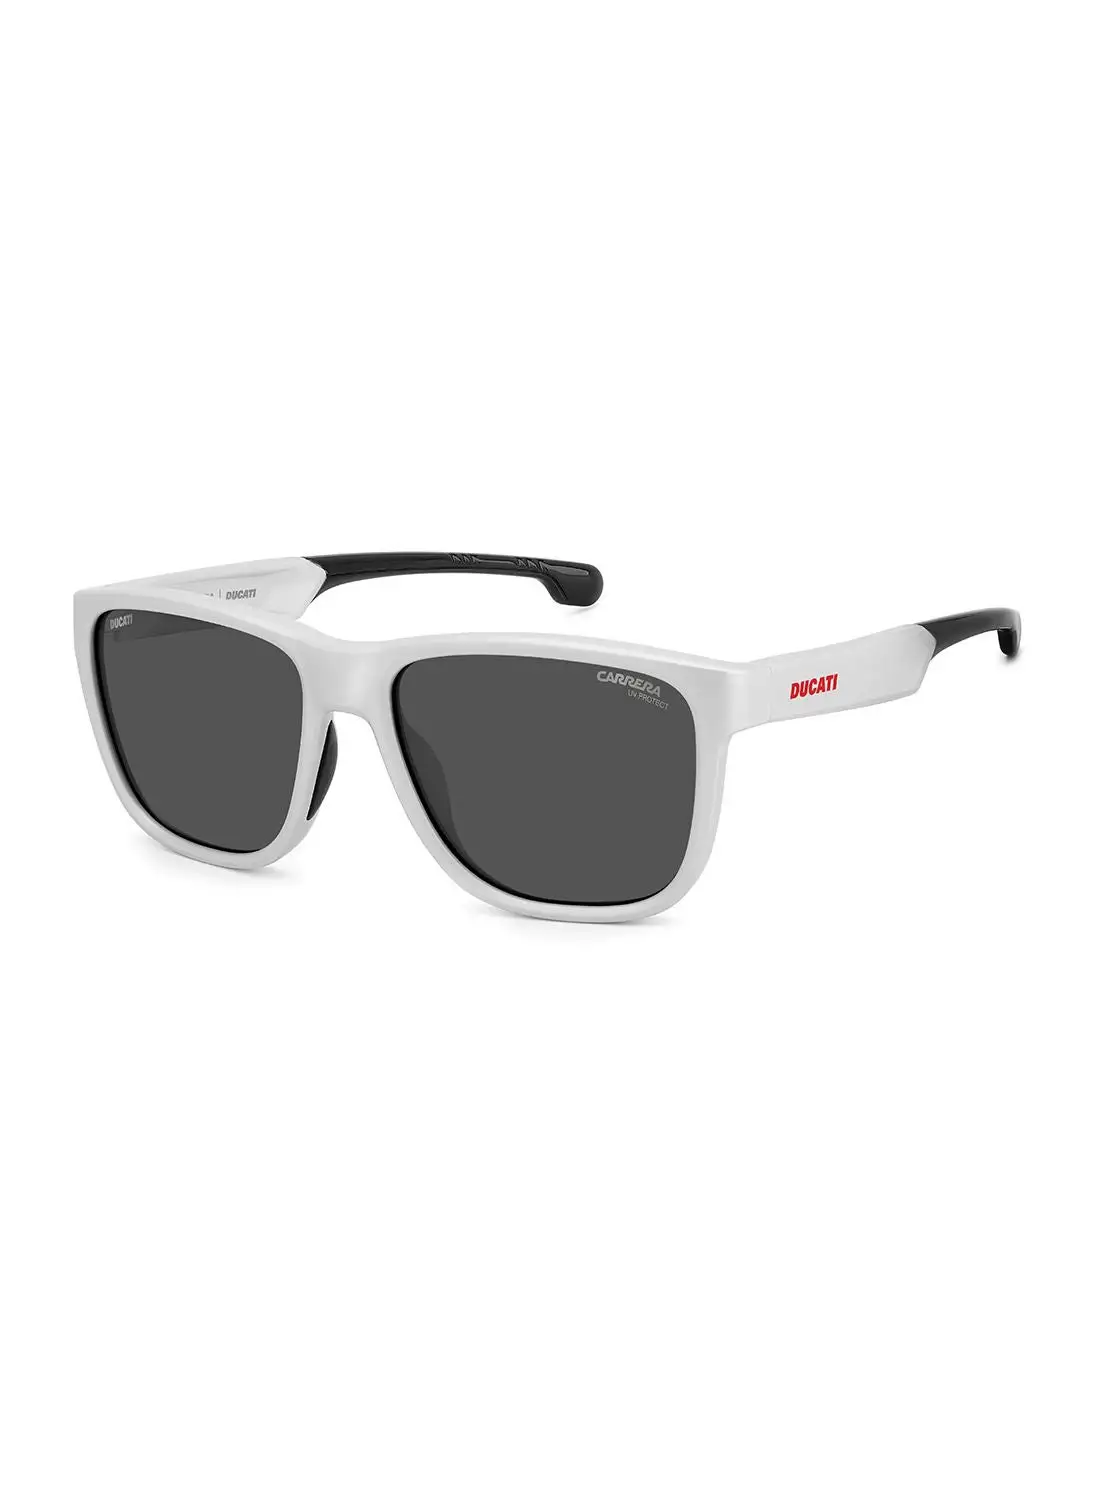 Carrera Men's UV Protection Square Sunglasses - Carduc 003/S Matte White 57 - Lens Size: 57 Mm